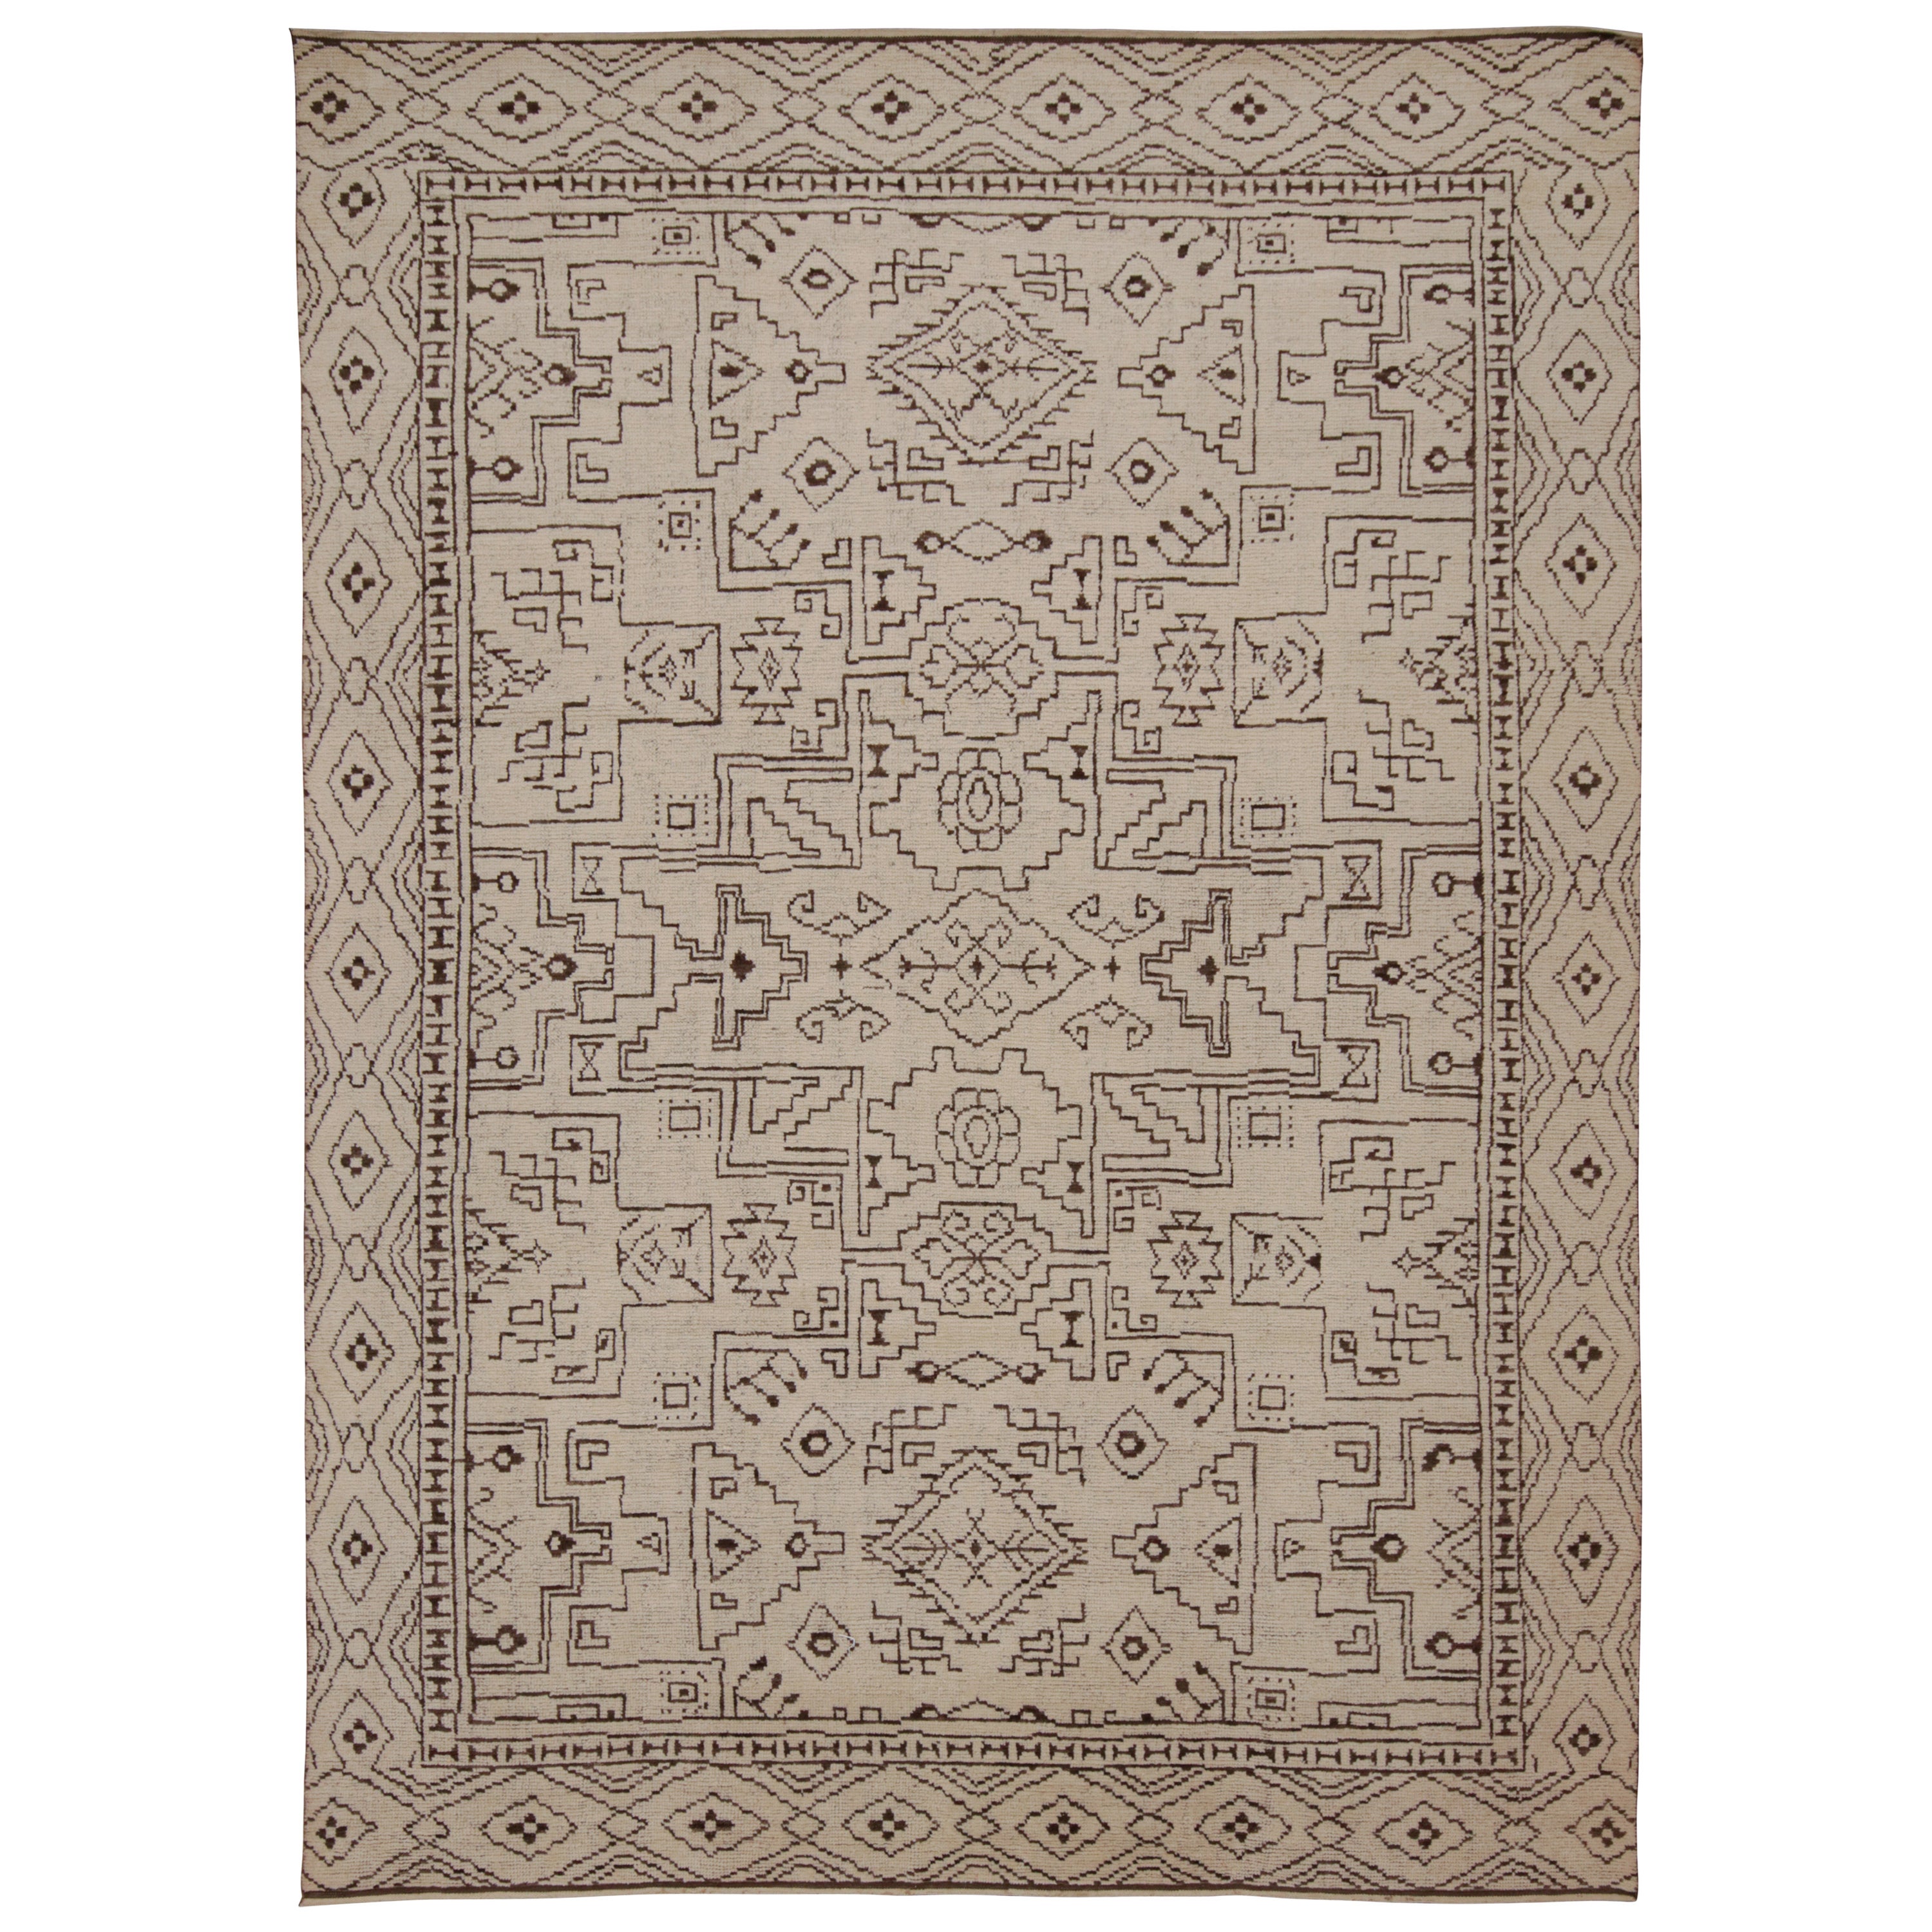 Rug & Kilim's Modern Modern Moroccan Style Rug in Beige & Brown Geometric Patterns (tapis de style marocain moderne aux motifs géométriques beiges et bruns)